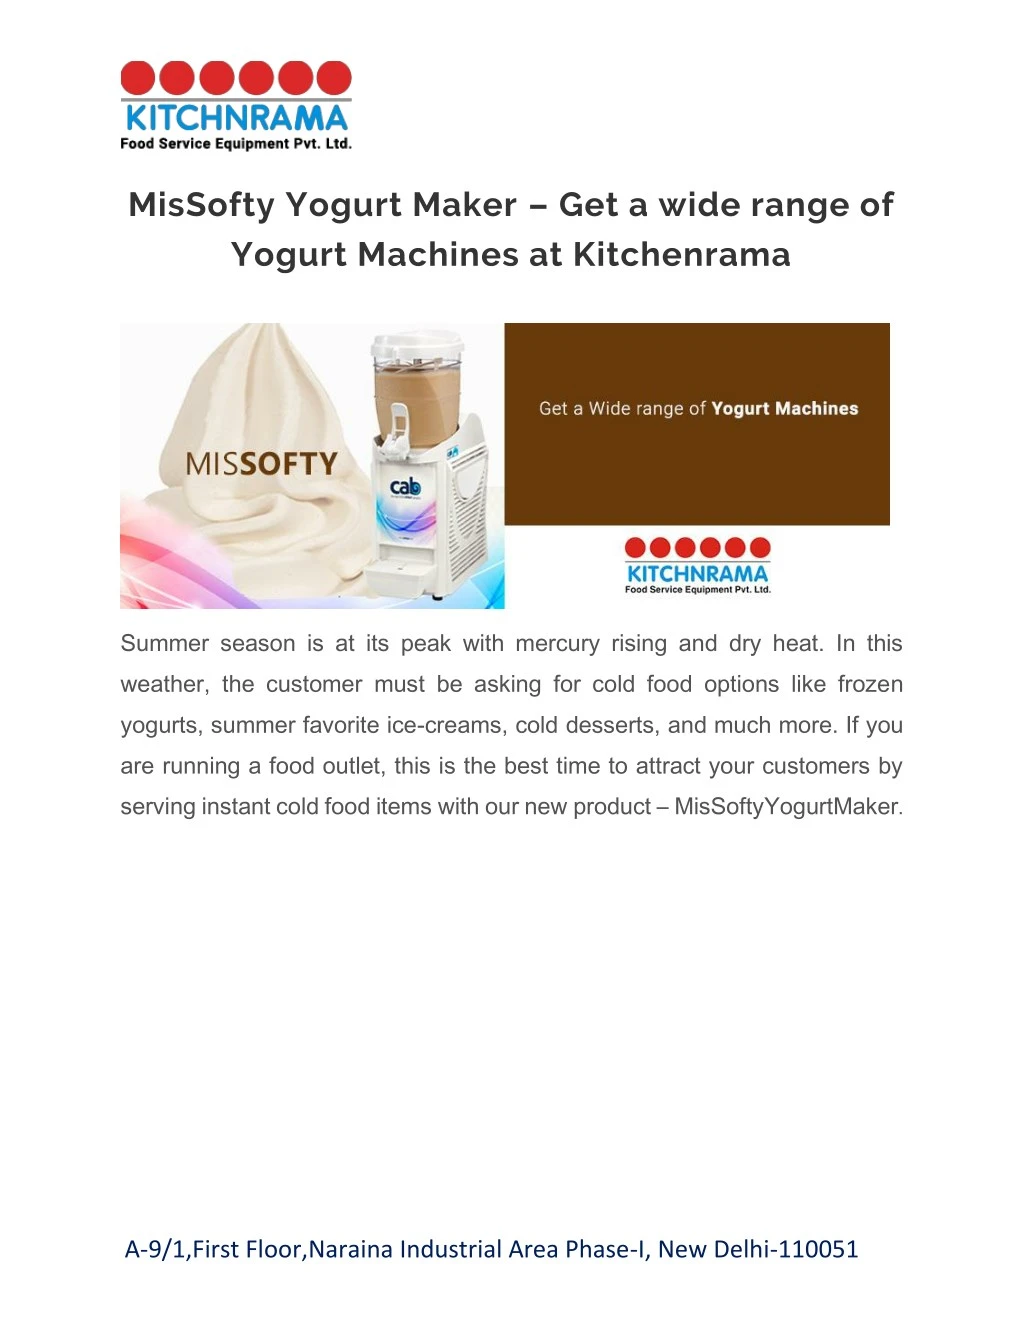 missofty yogurt maker get a wide range of yogurt